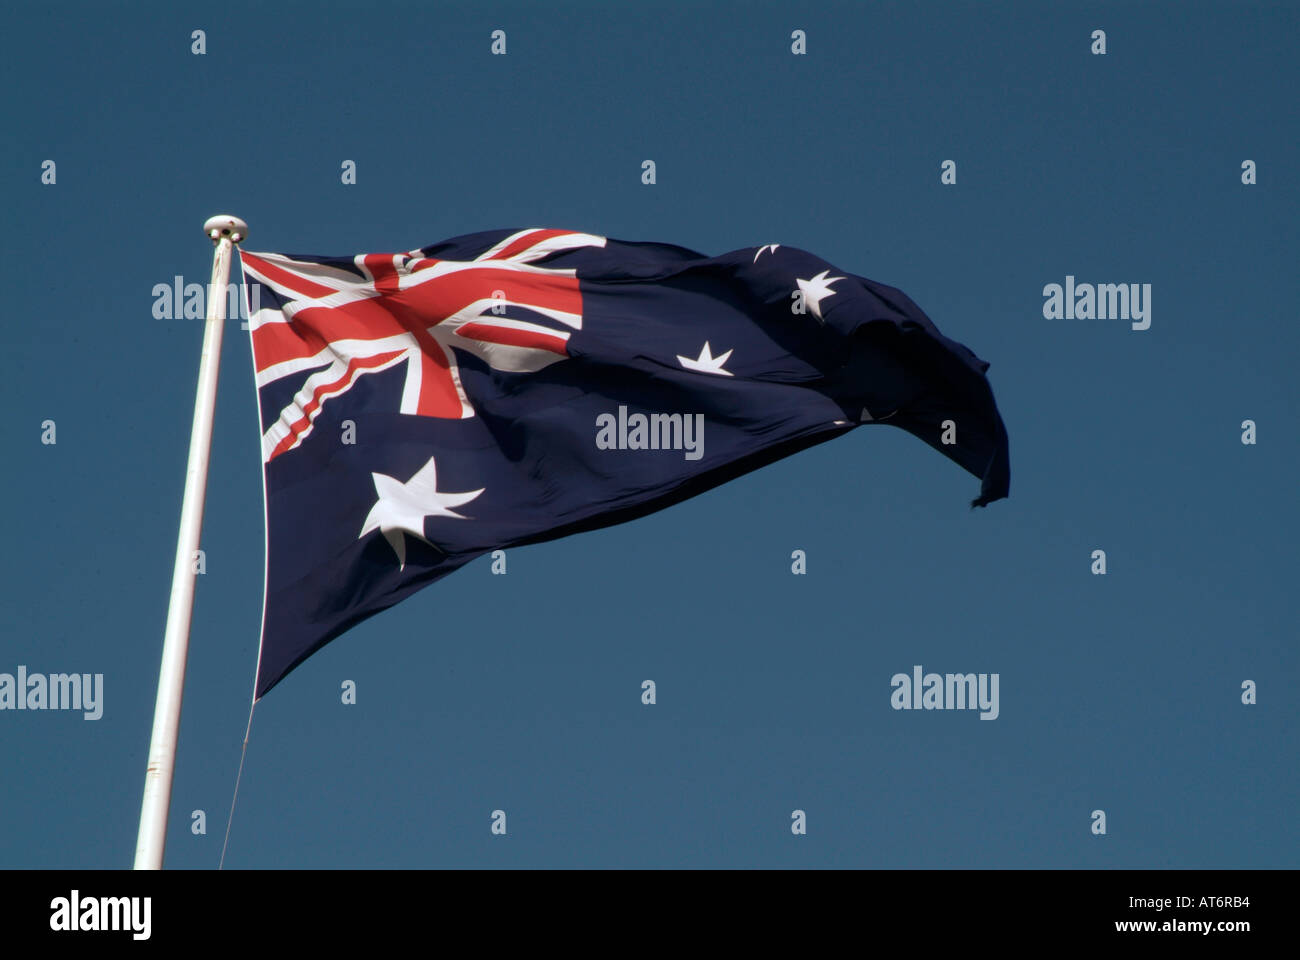 australia australian national flag flutter fluttering wind ripple union jack Southern Cross  Commonwealth Star or Star of Federa Stock Photo